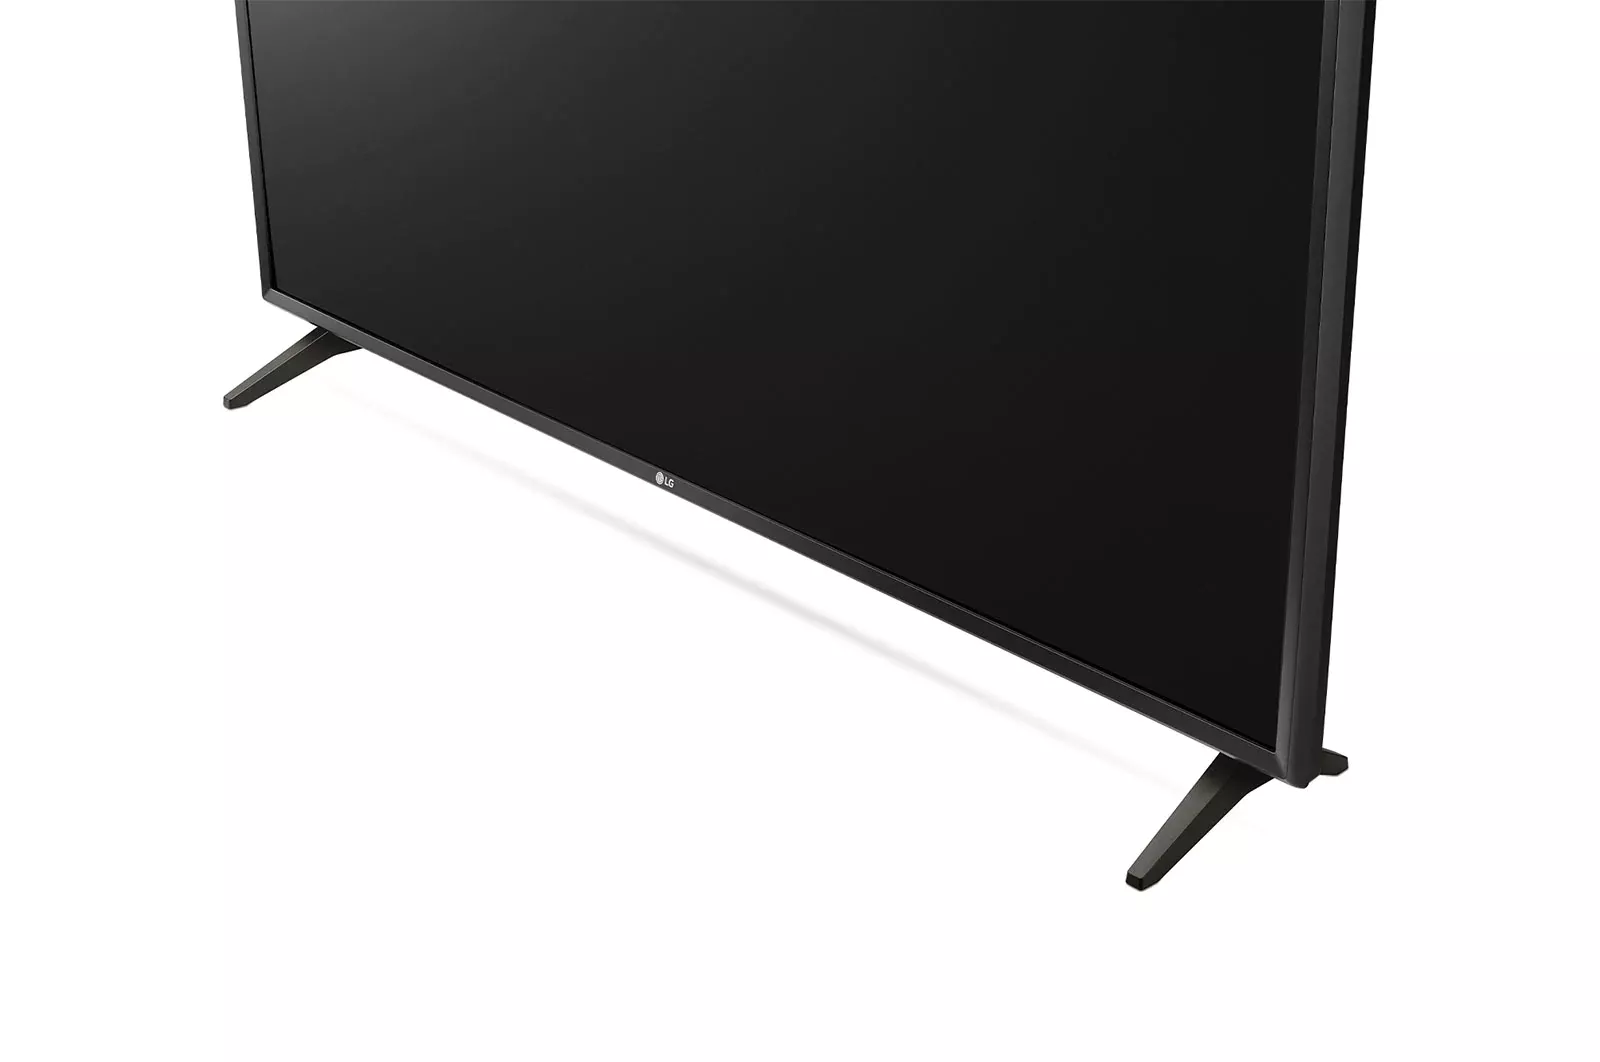 Buy LG LQ57 81.28 cm (32 inch) HD Ready LED Smart WebOS TV with Î